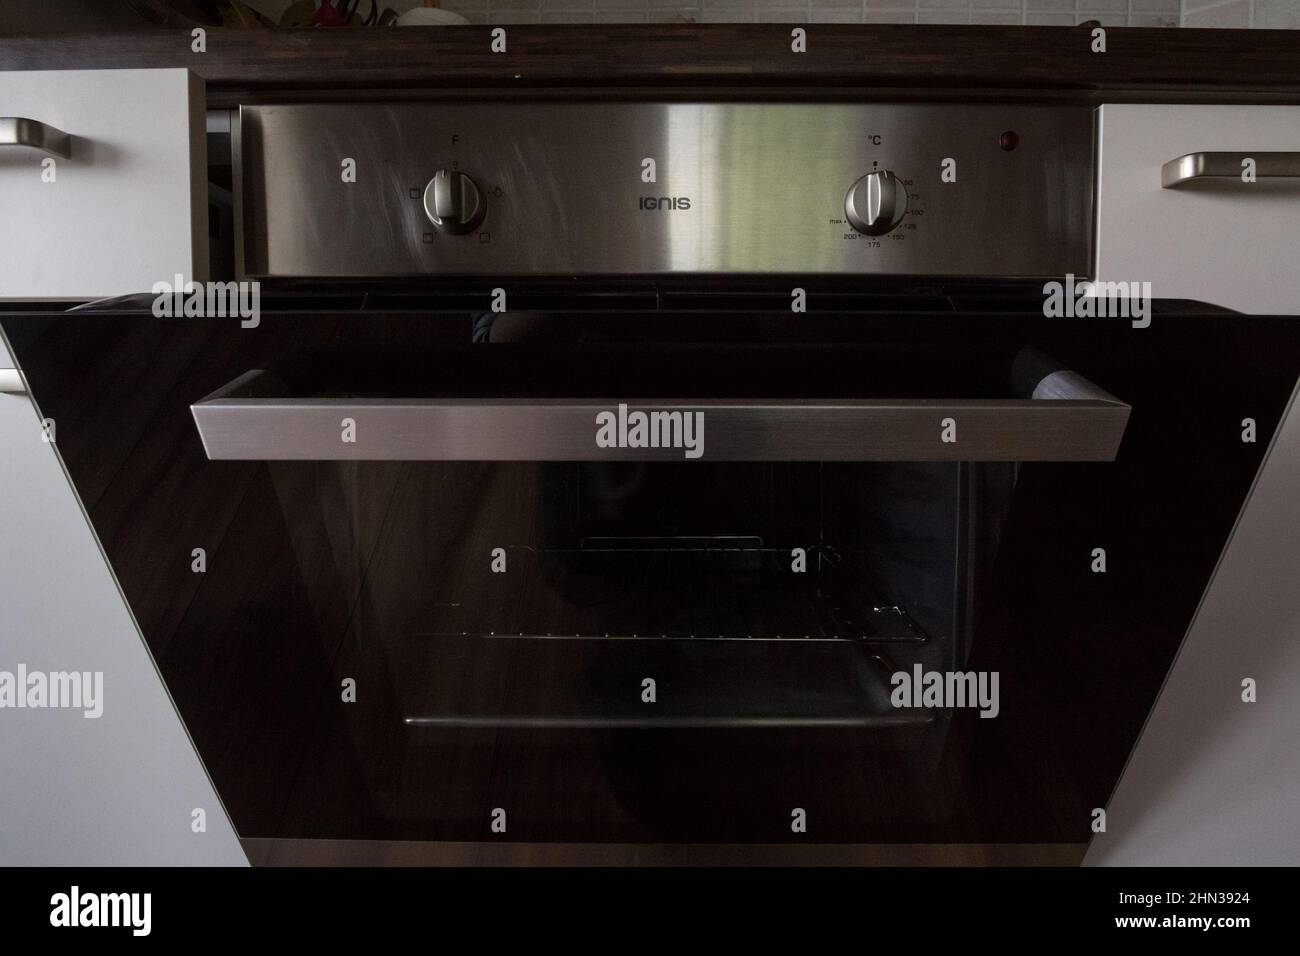 Electrodomésticos italianos fotografías e imágenes de alta resolución -  Alamy